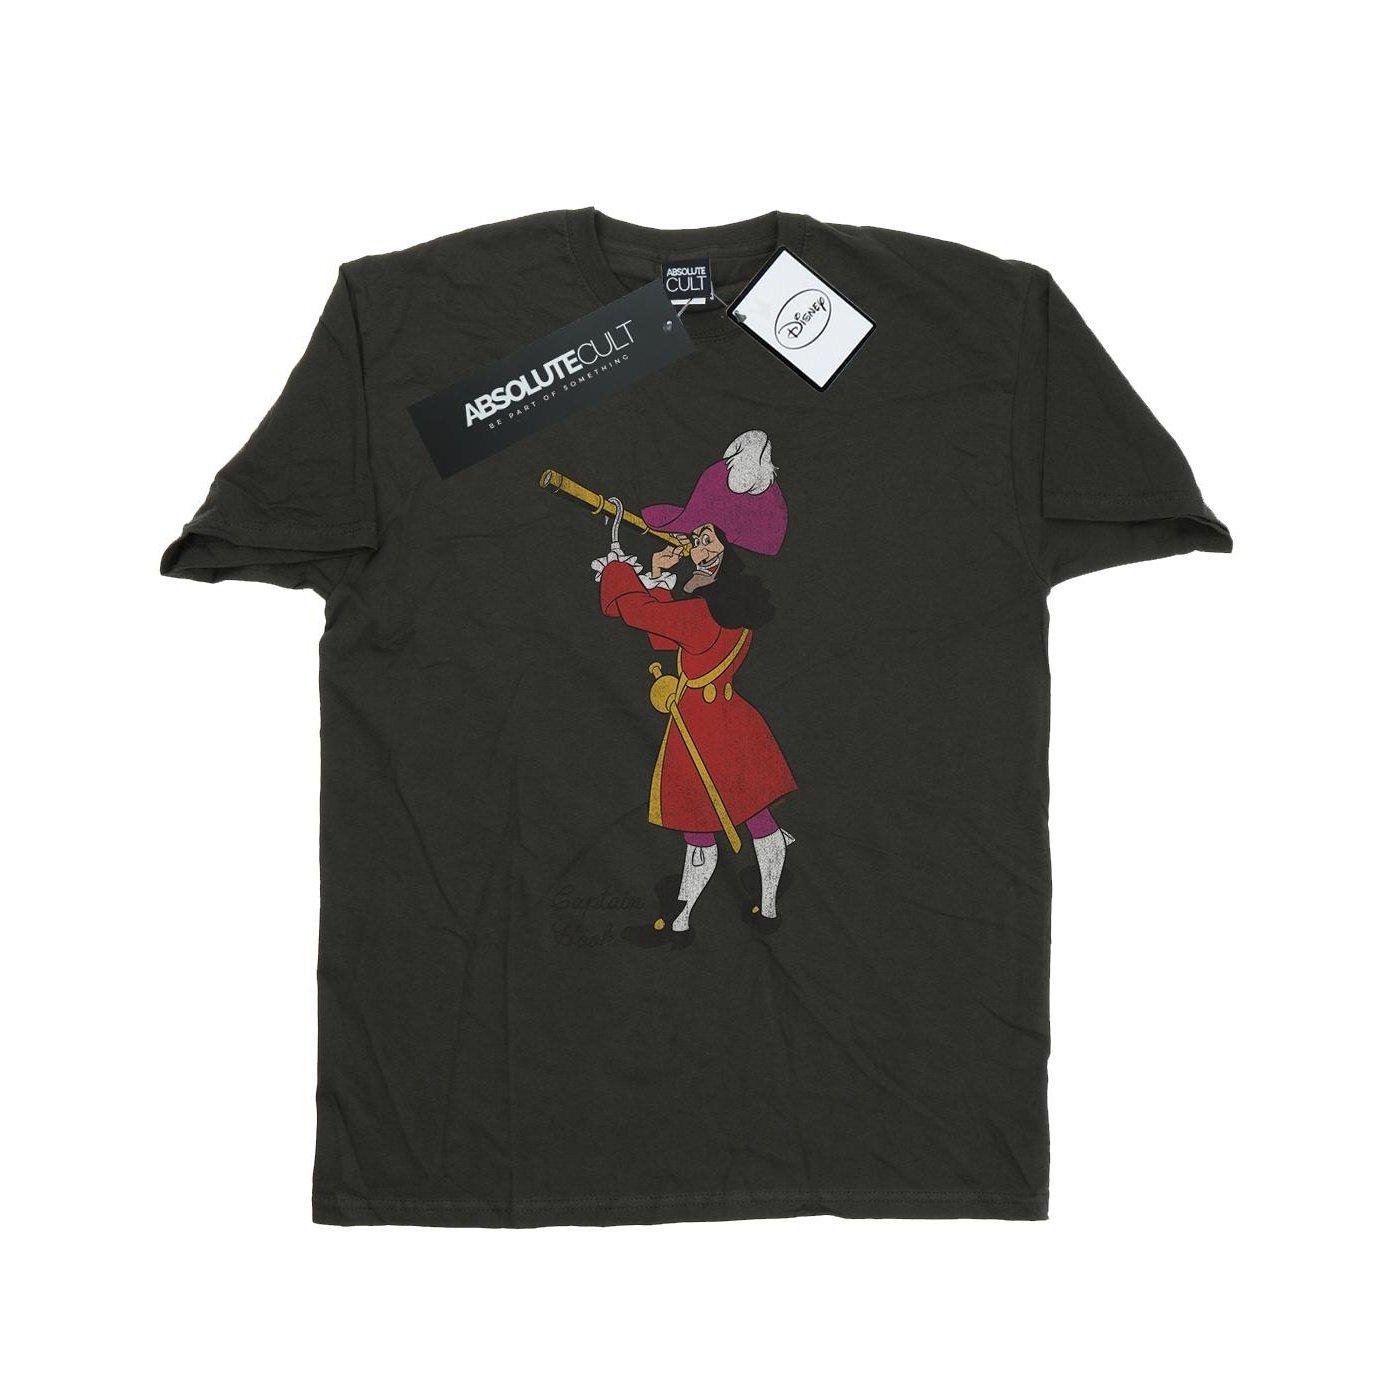 Classic Tshirt Herren Taubengrau XL von Peter Pan